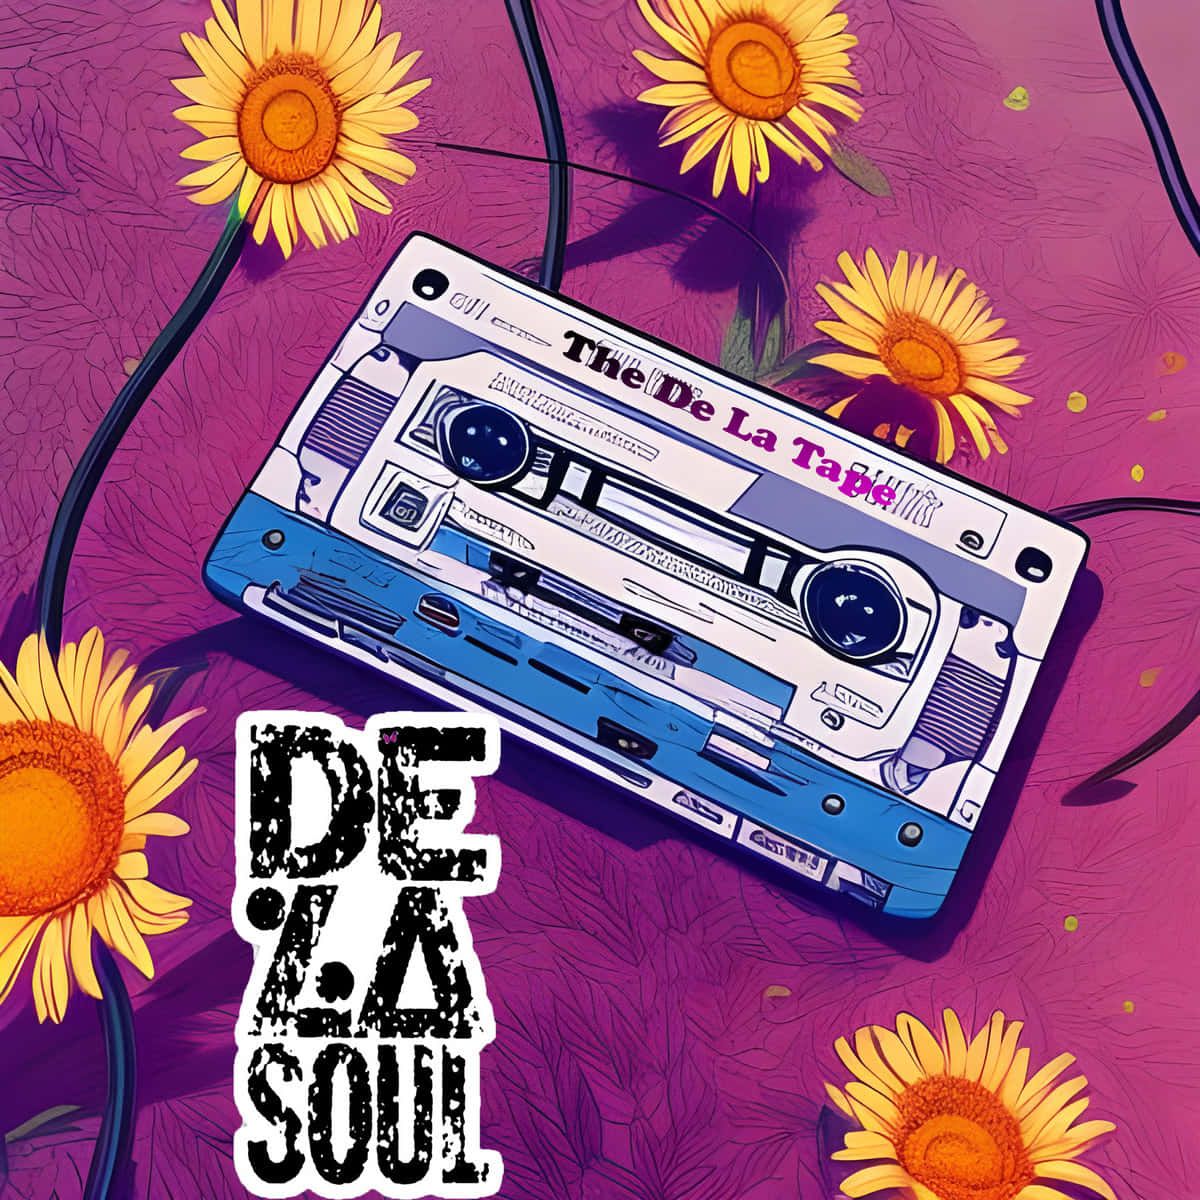 De La Soul Wallpapers - Top Free De La Soul Backgrounds - WallpaperAccess